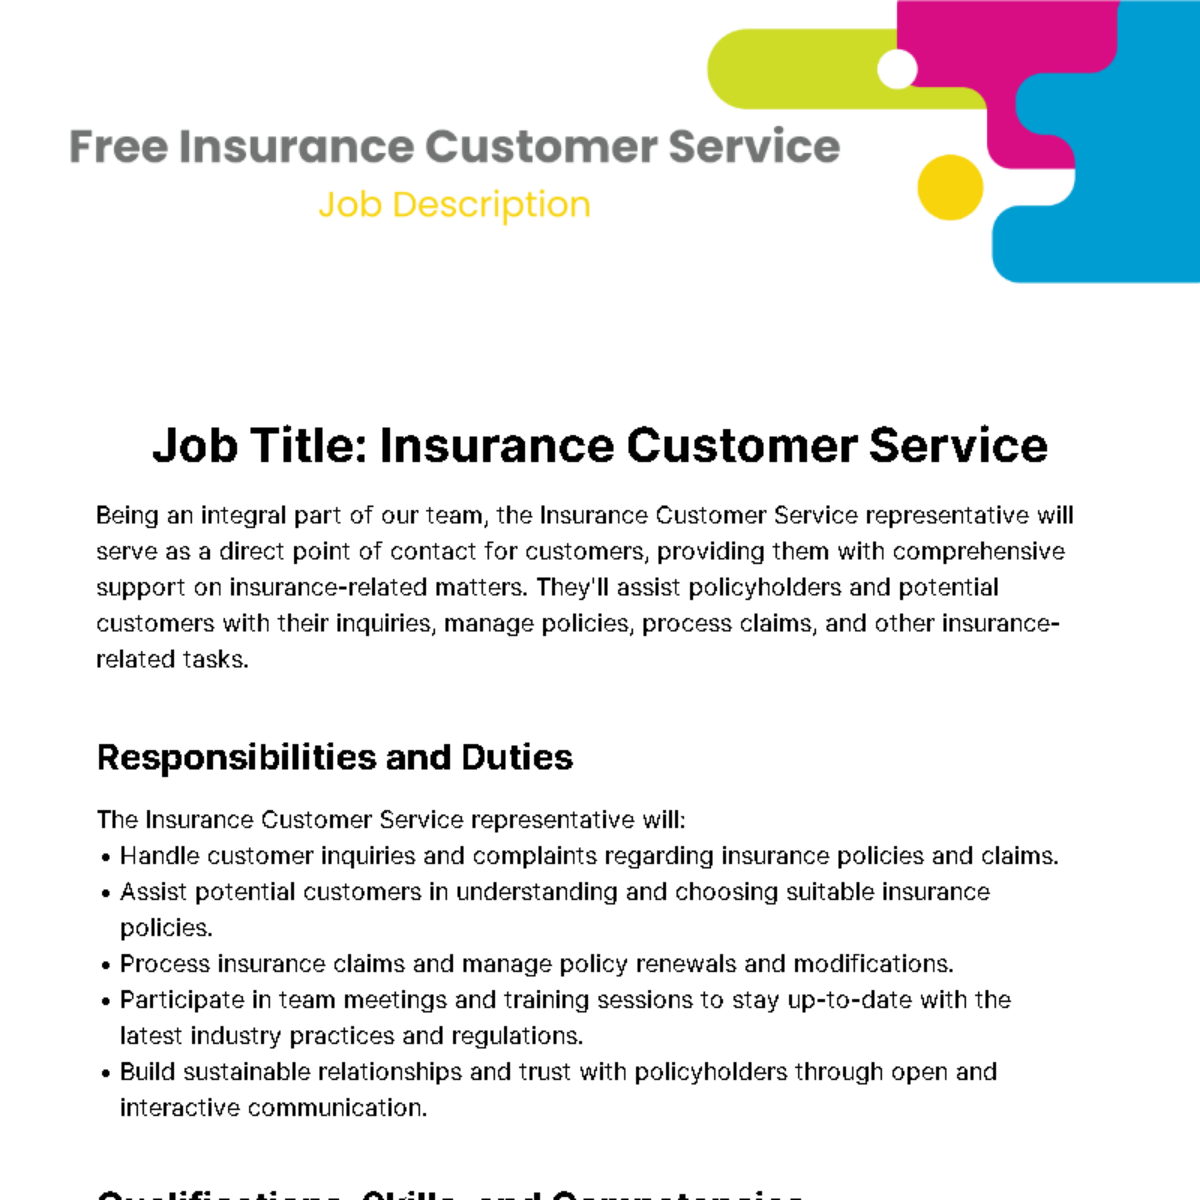 Free Insurance Customer Service Job Description Template